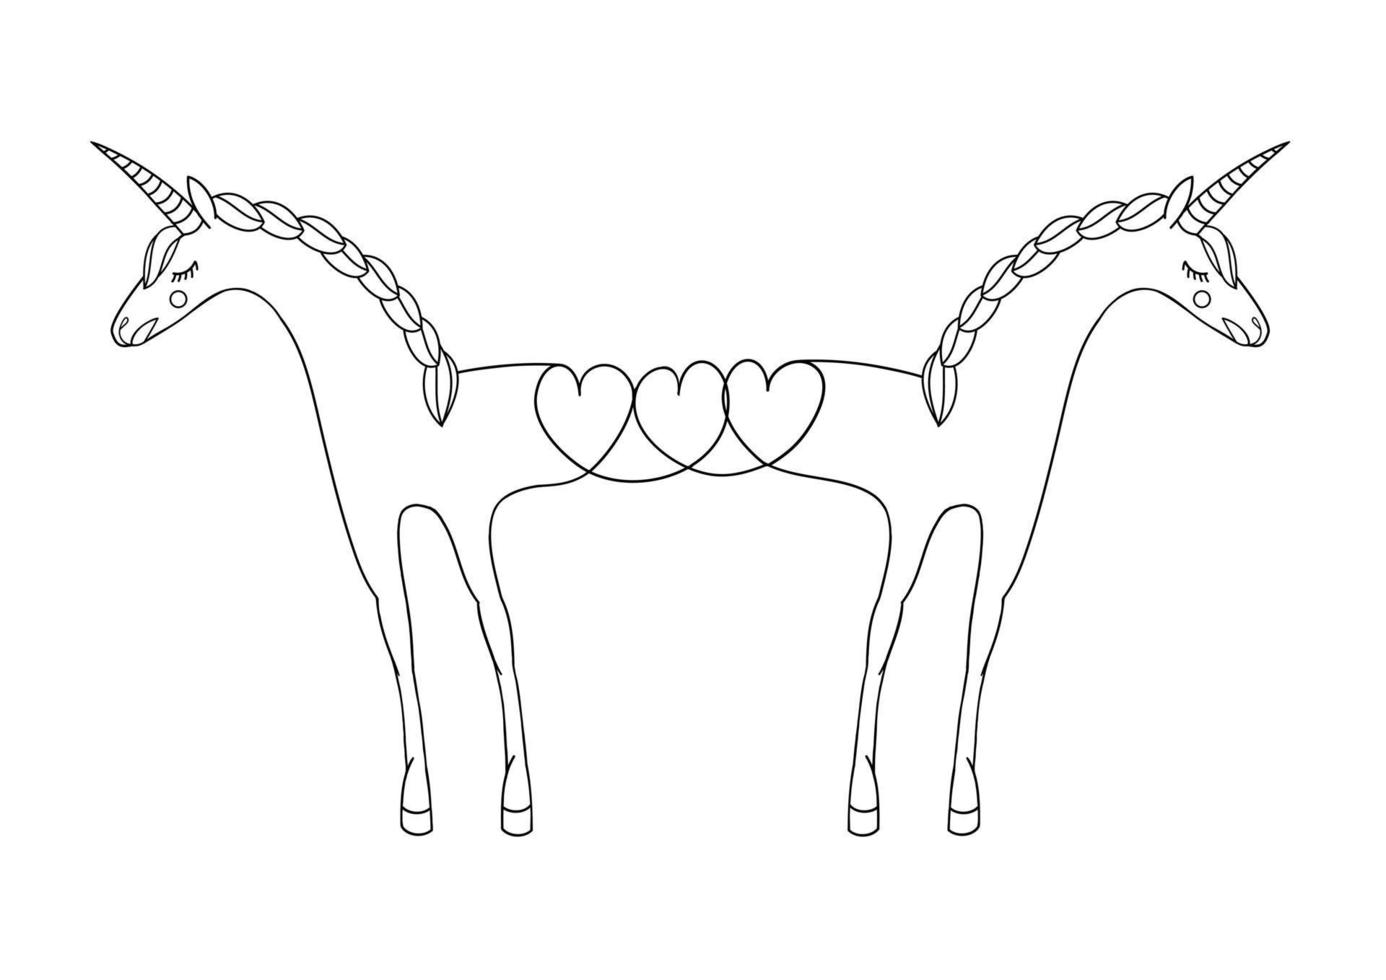 Unicorn, hand drawn vector